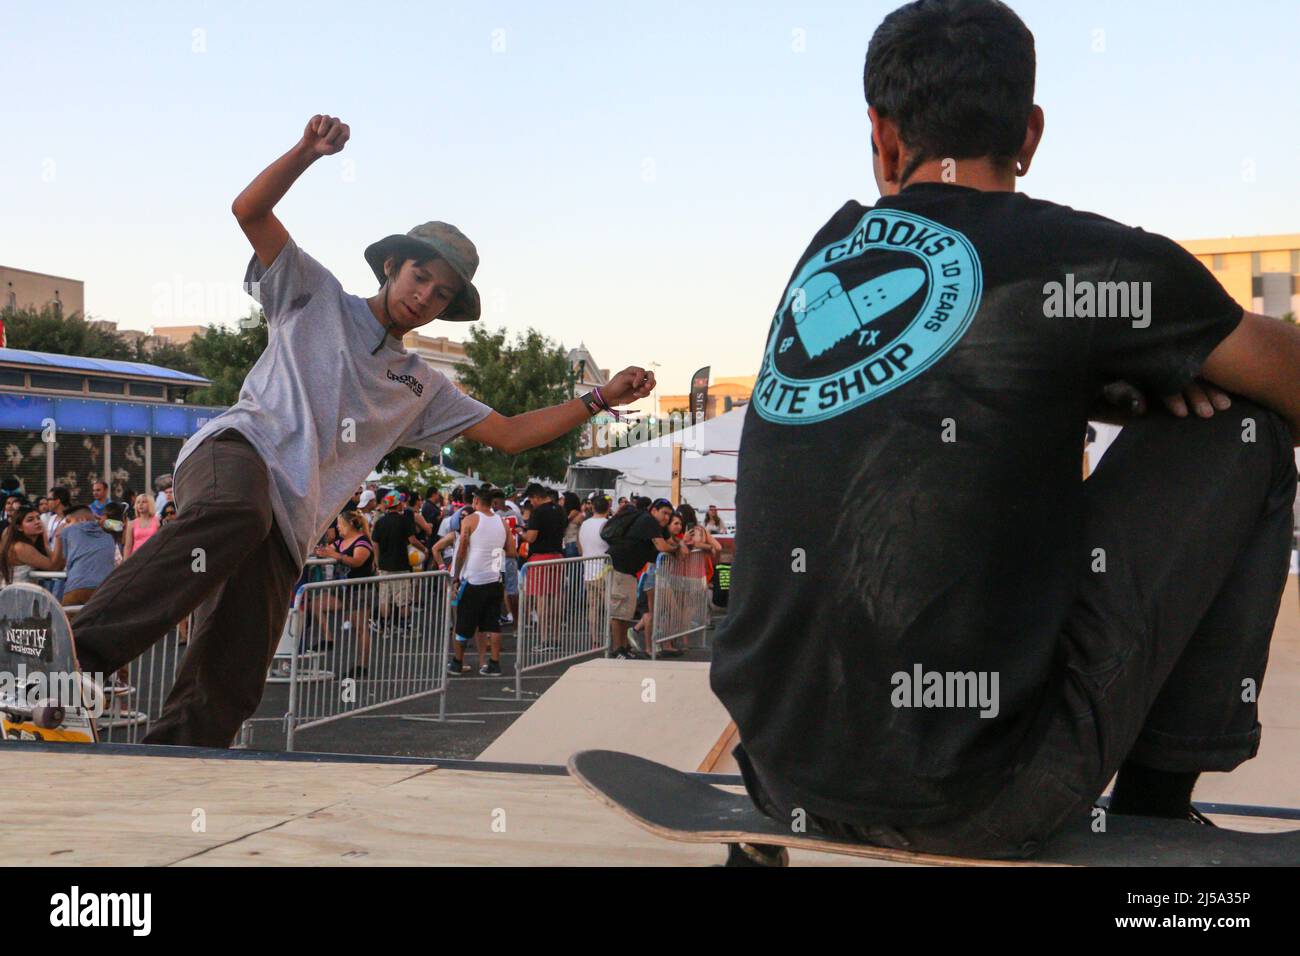 Skateboarders at a skate park in El Paso, Texas. Stock Photo